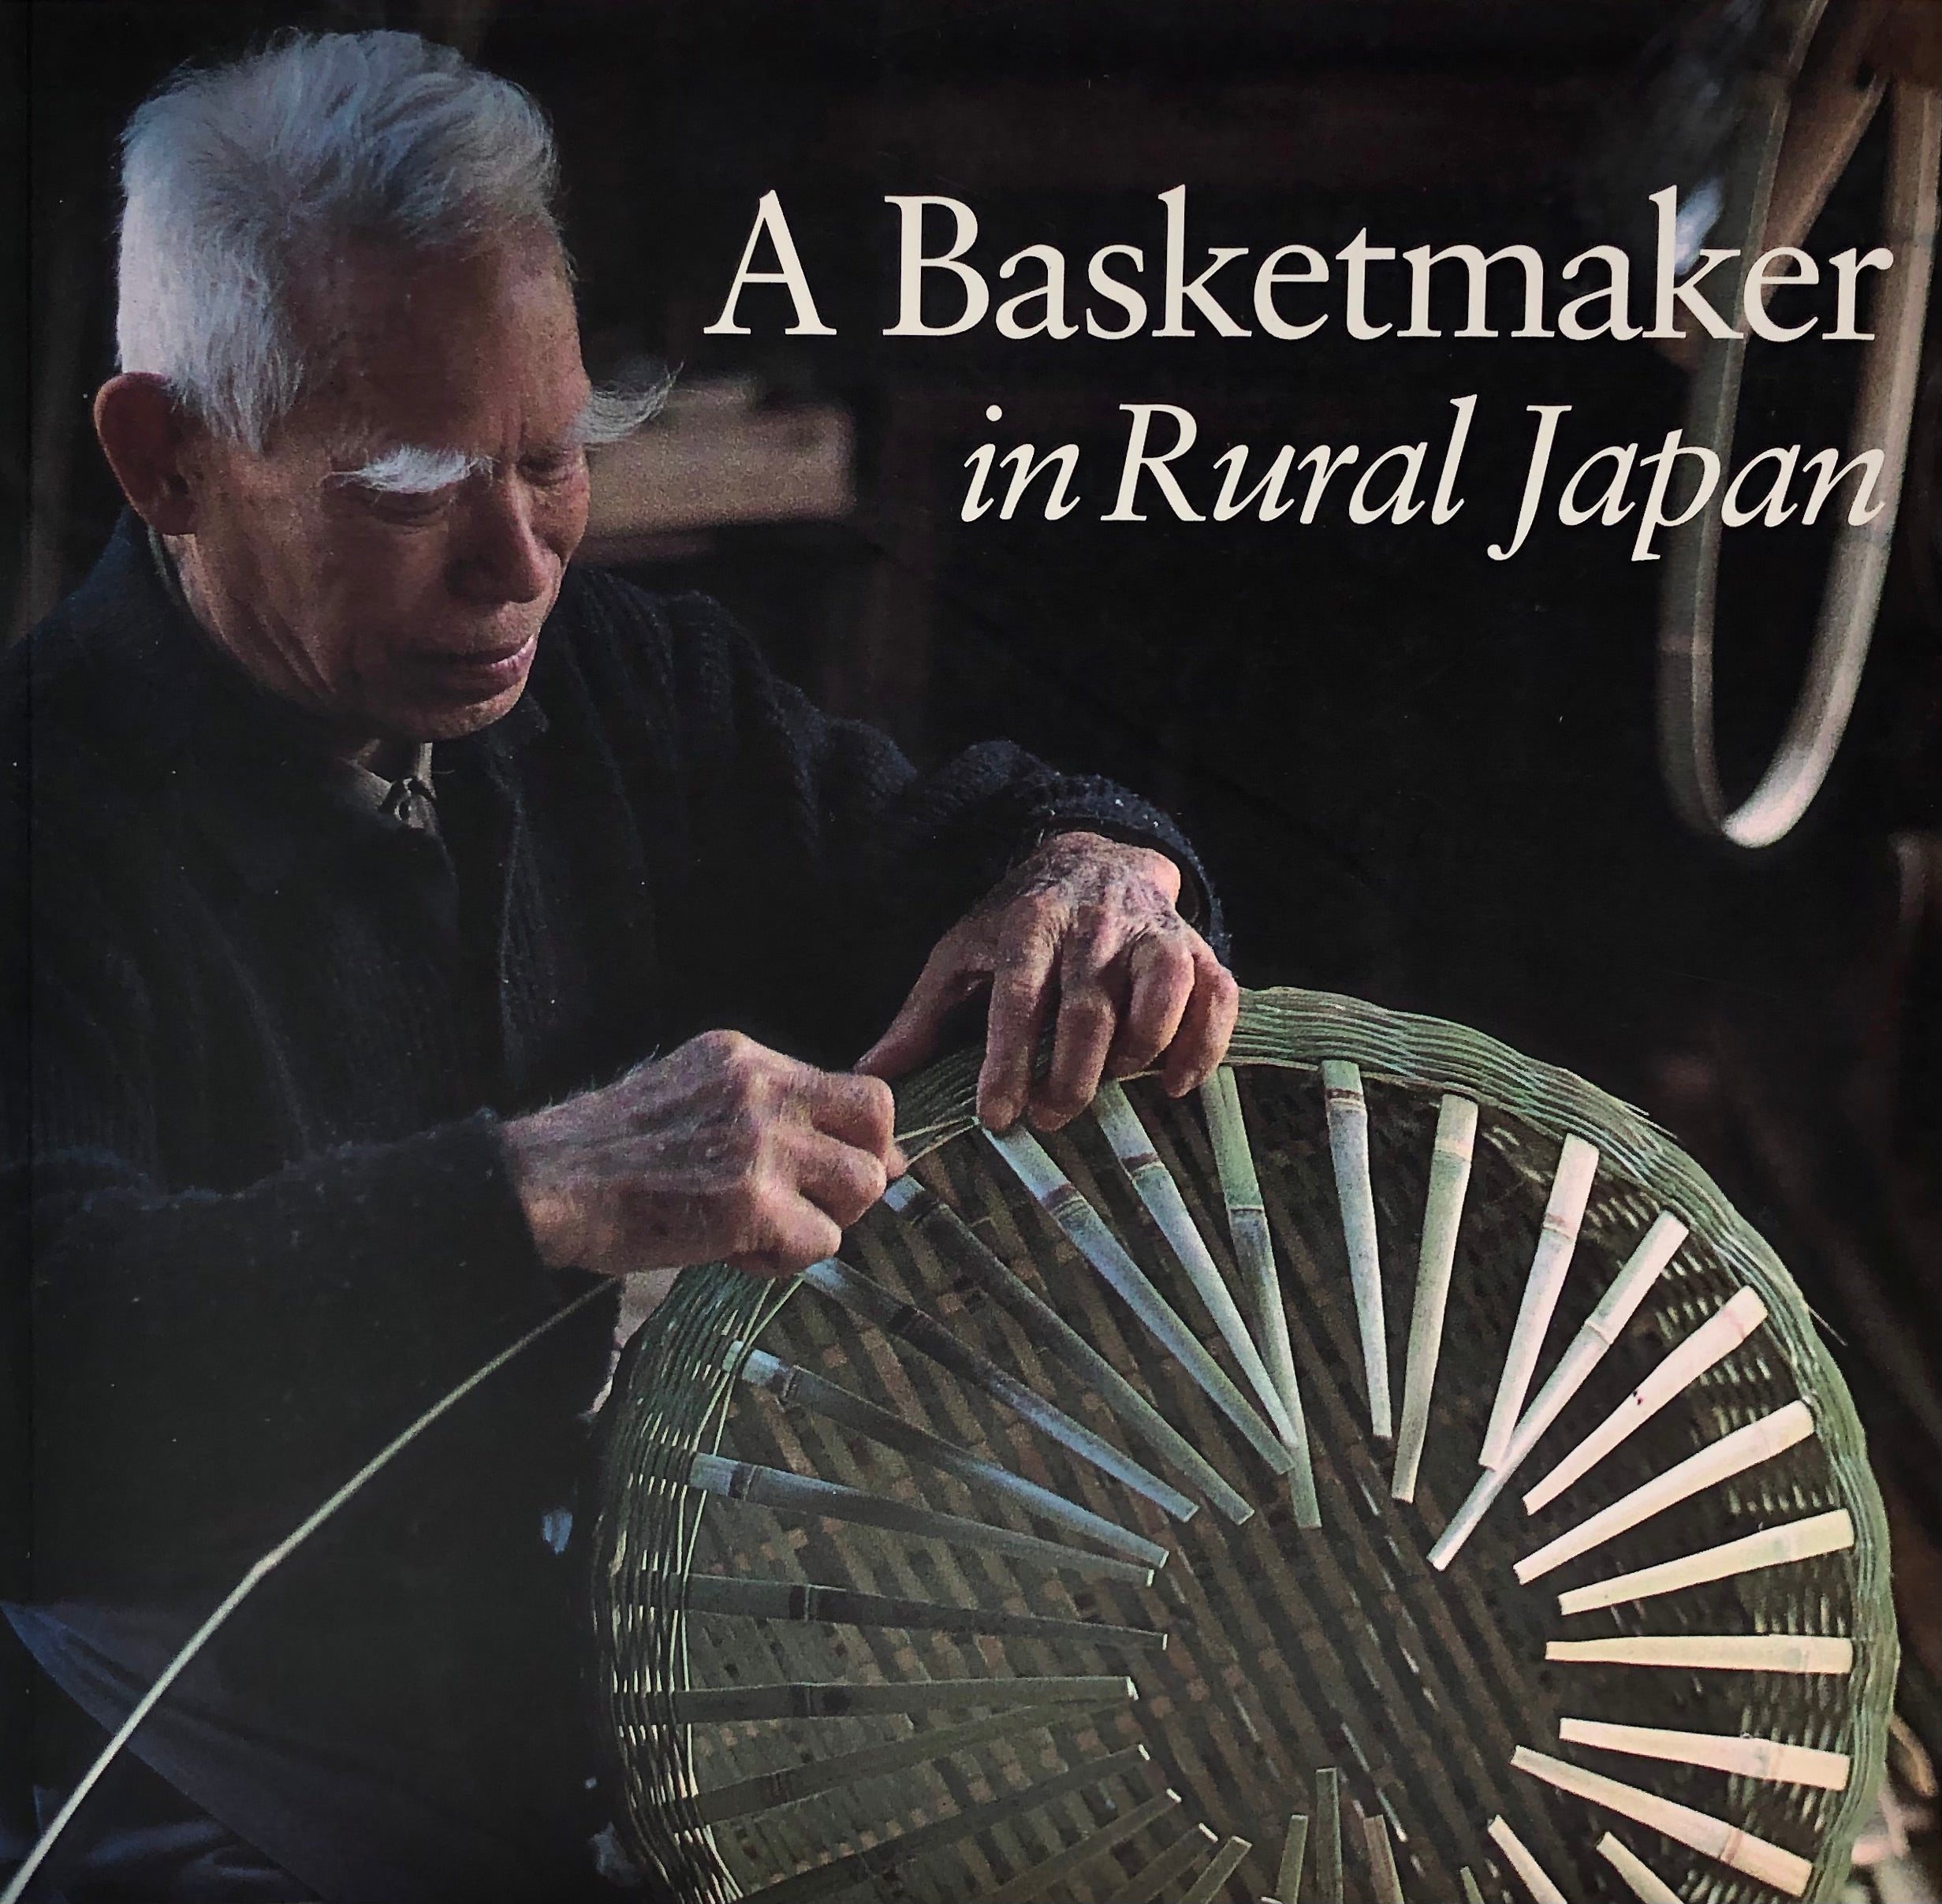 A Basketmaker in Rural Japan by Louise Allison Cort and Nakamura Kenji